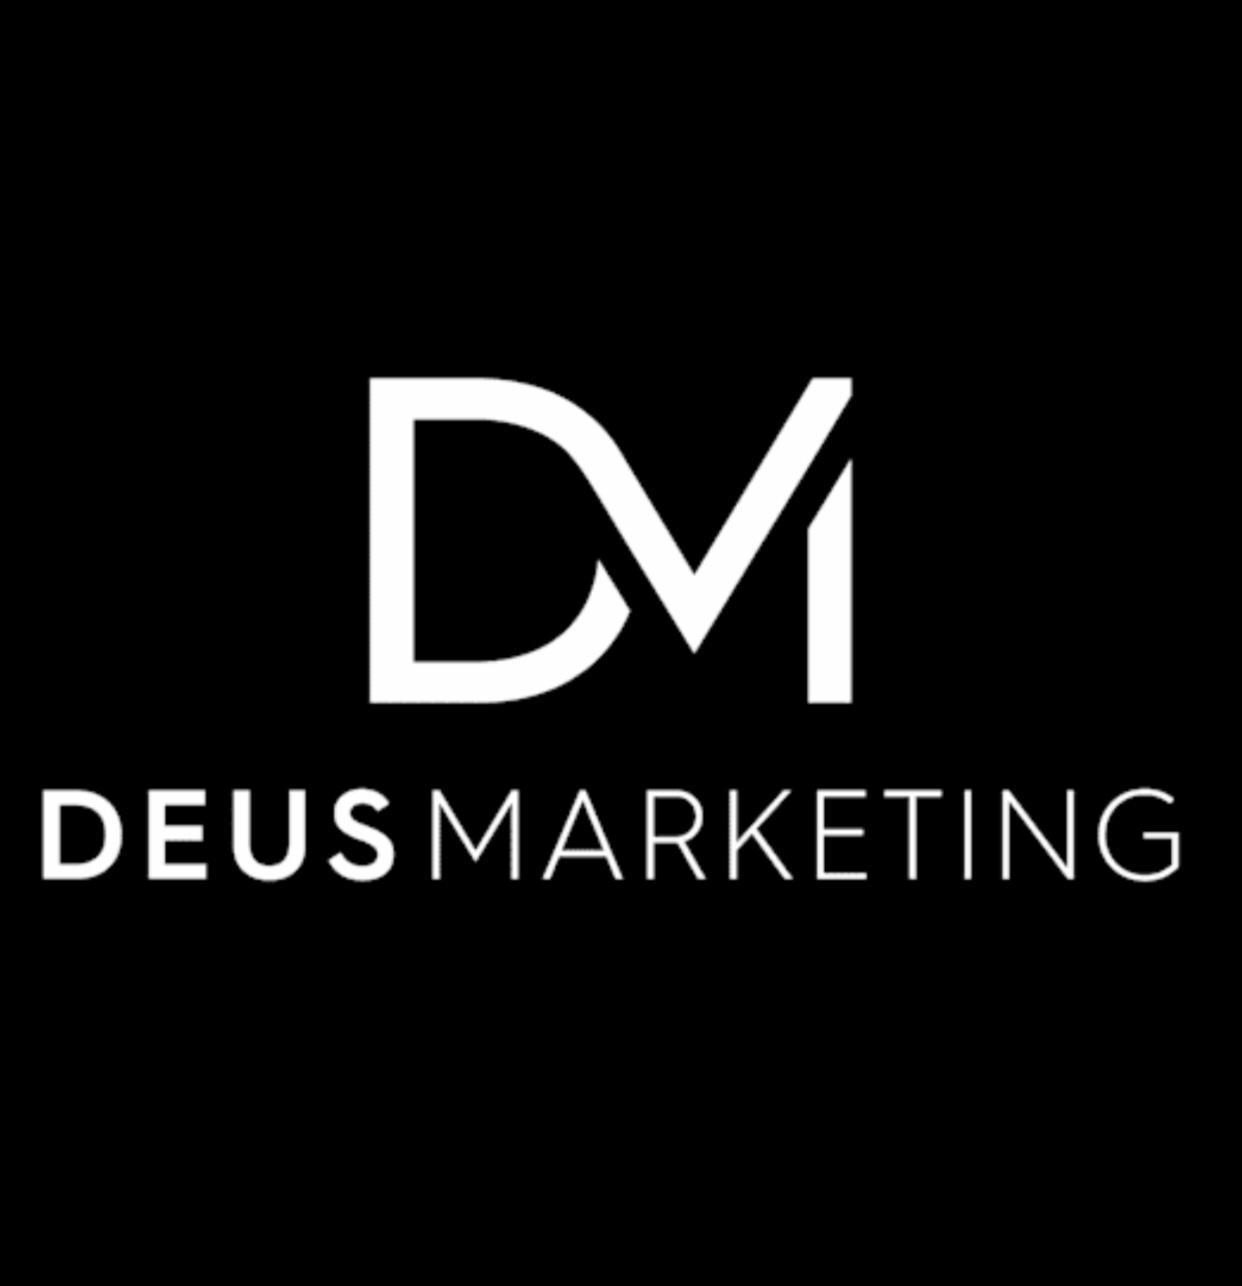 DEUS Marketing GmbH profile on Qualified.One